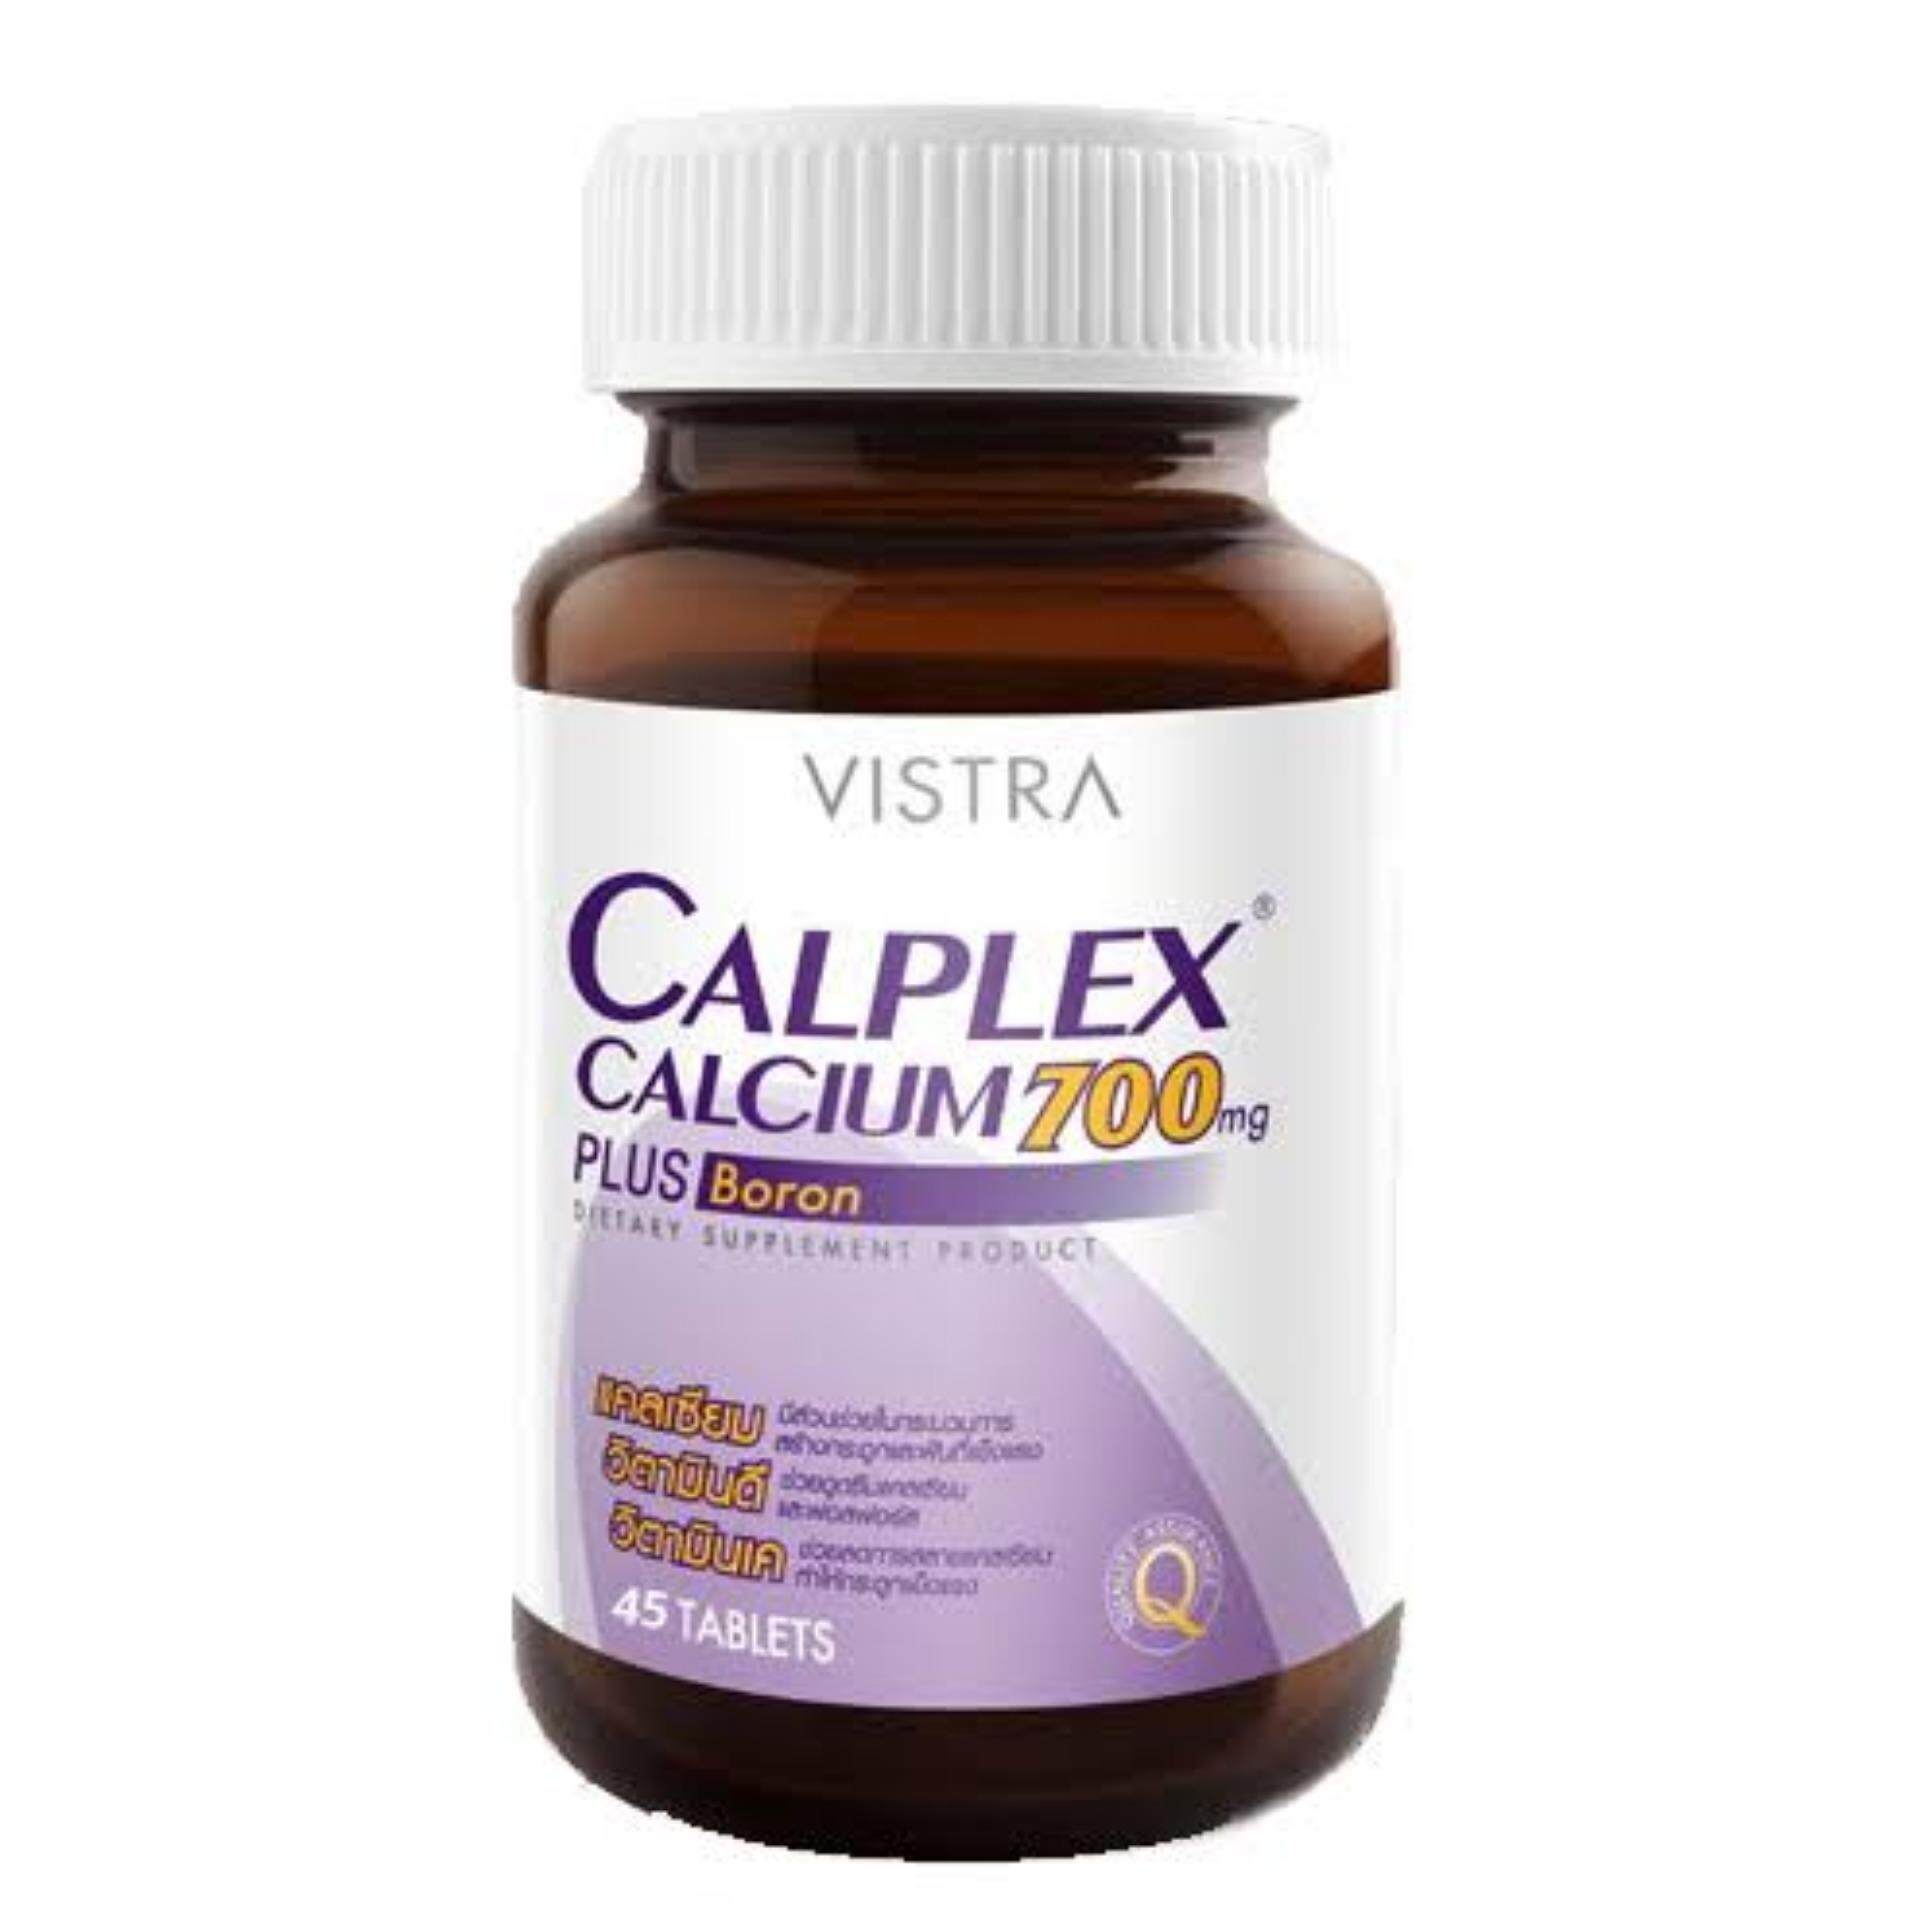 Vistra Calplex Calcium 700 mg Plus Boron 45 Tablets วิสทร้า แคลเพล็กซ์ แคลเซียม700มก.พลัส โบรอน (45 เม็ด) [1 ขวด] 305